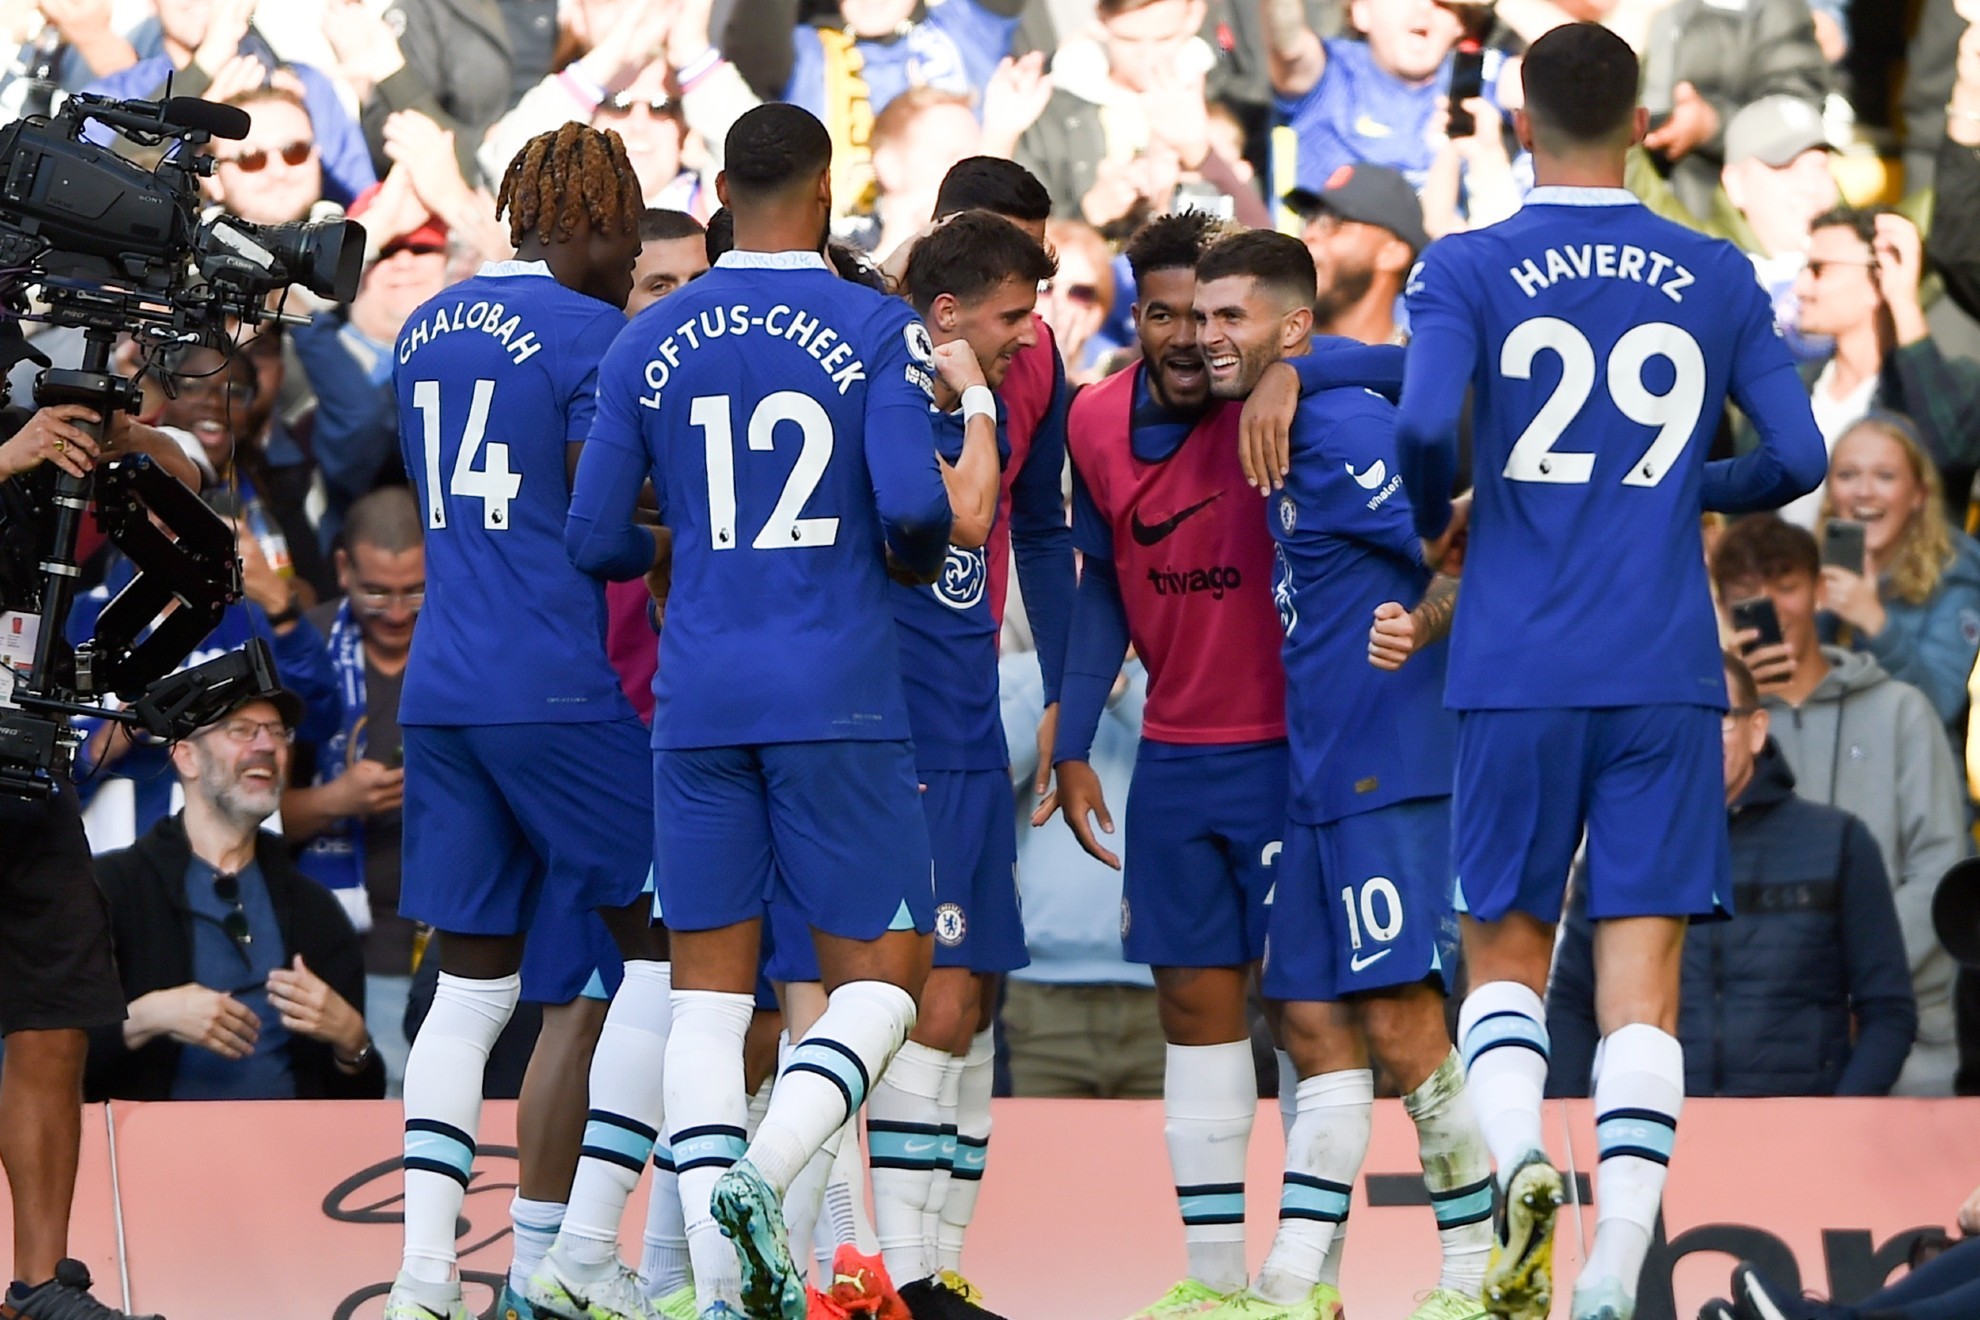 Chelsea celebrate. /EFE